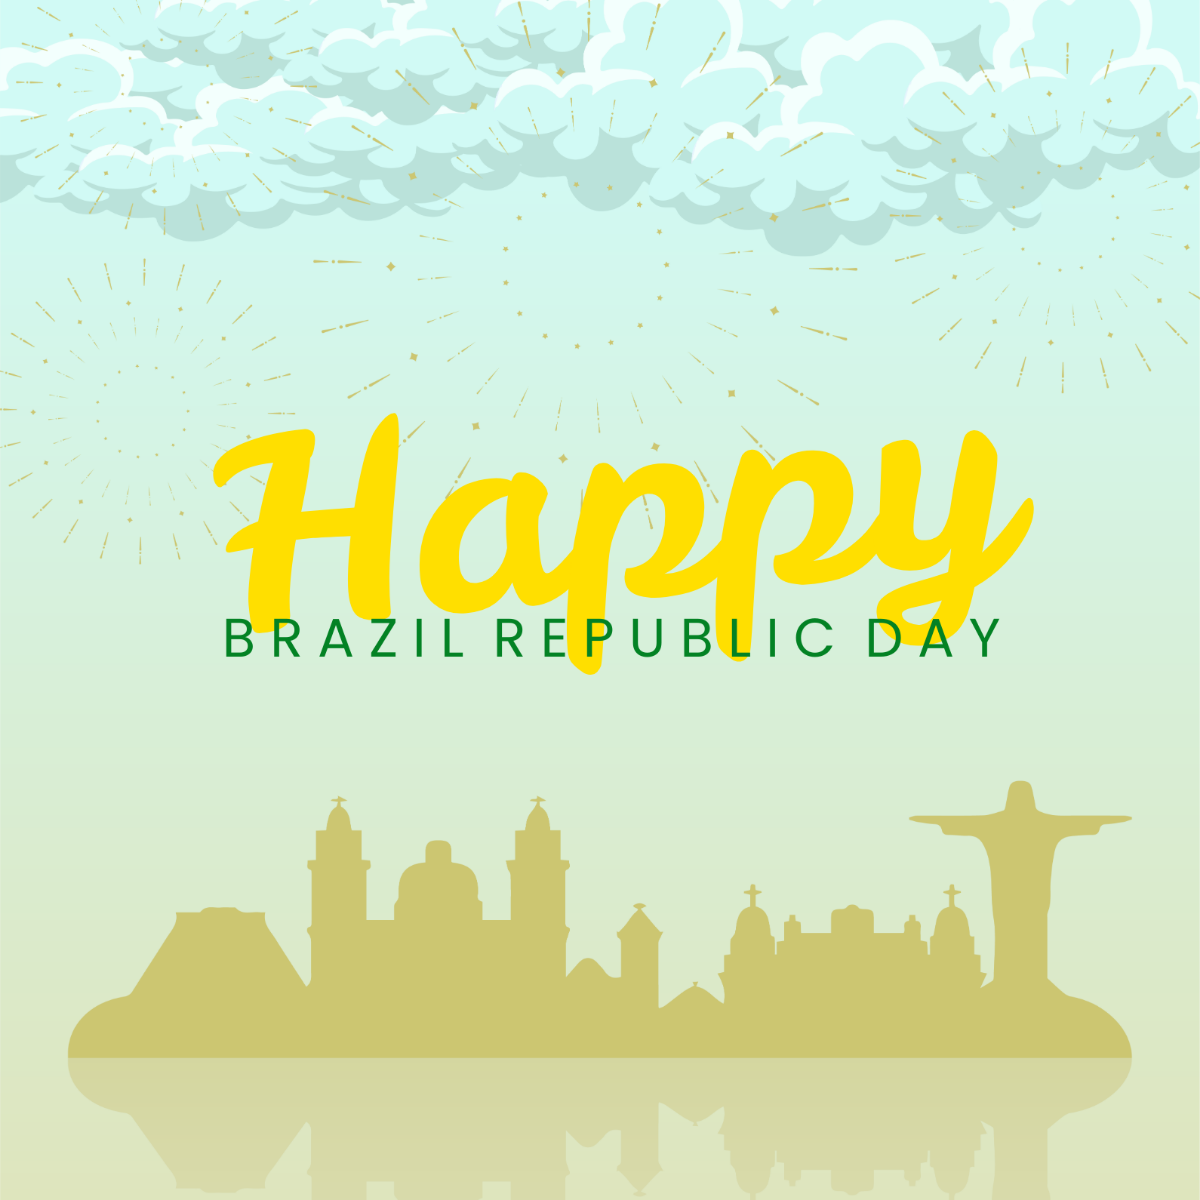 Brazil Republic Day LinkedIn Post Template